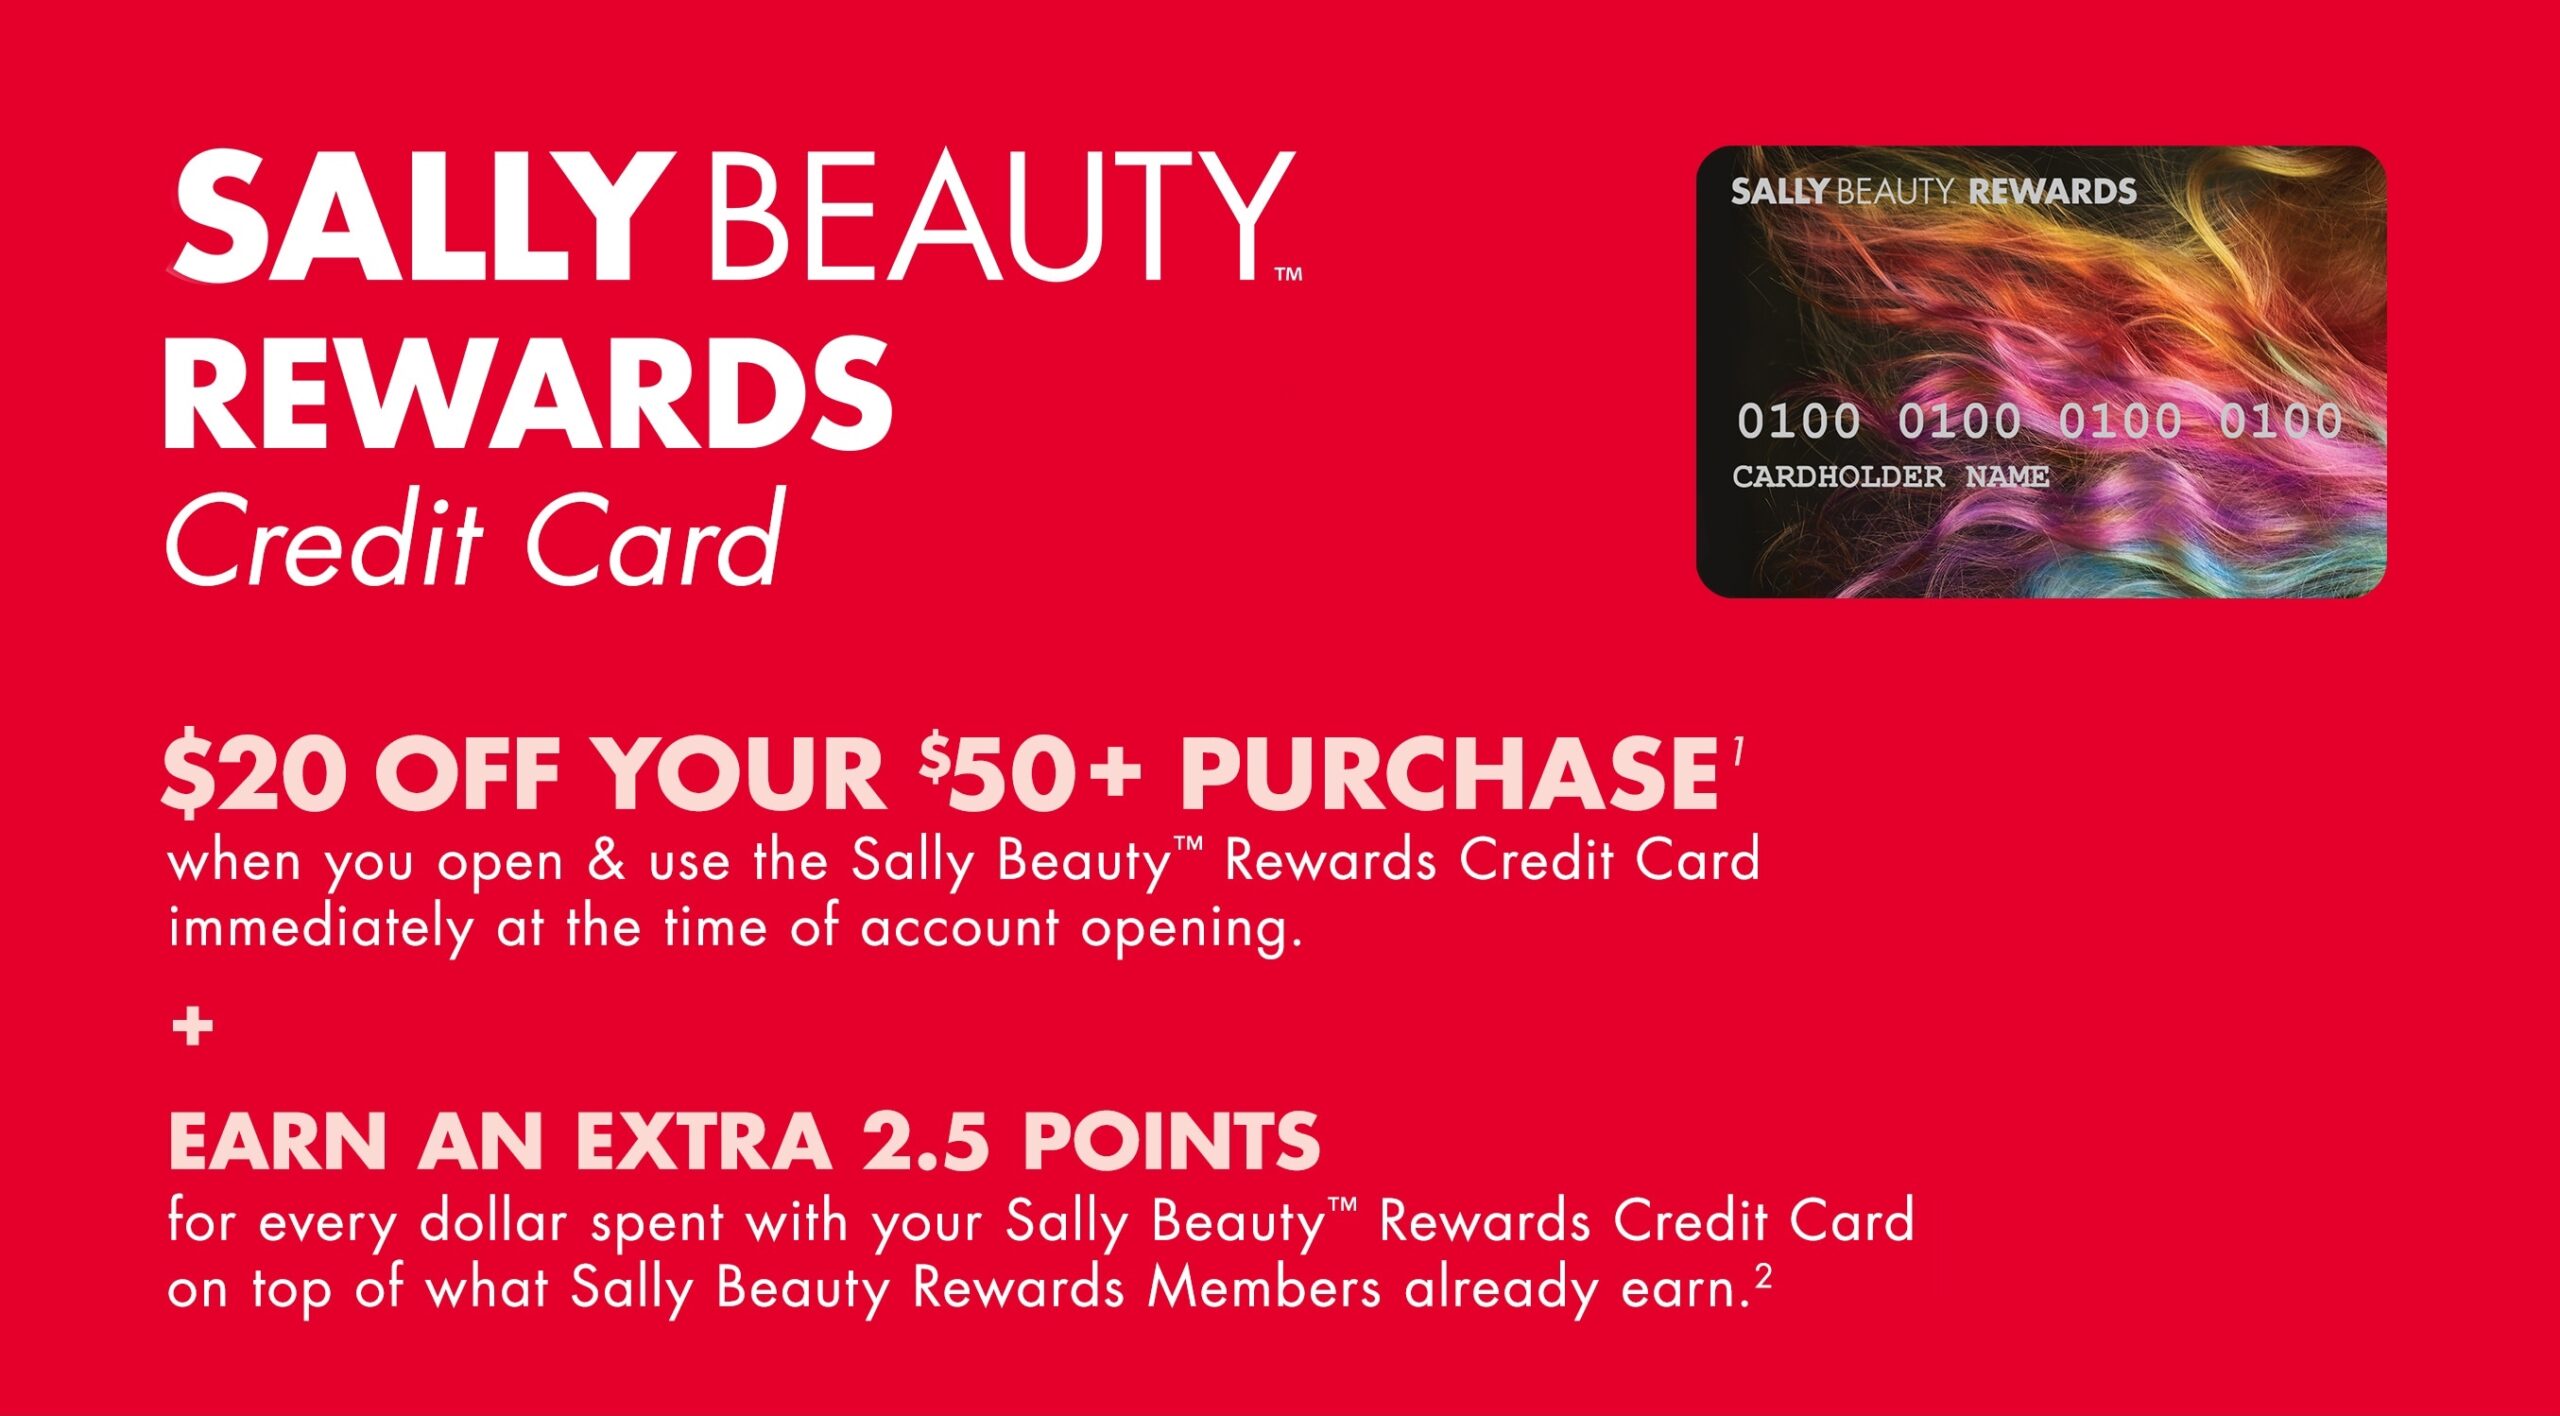 Sally Credit Card Rewards Reviews